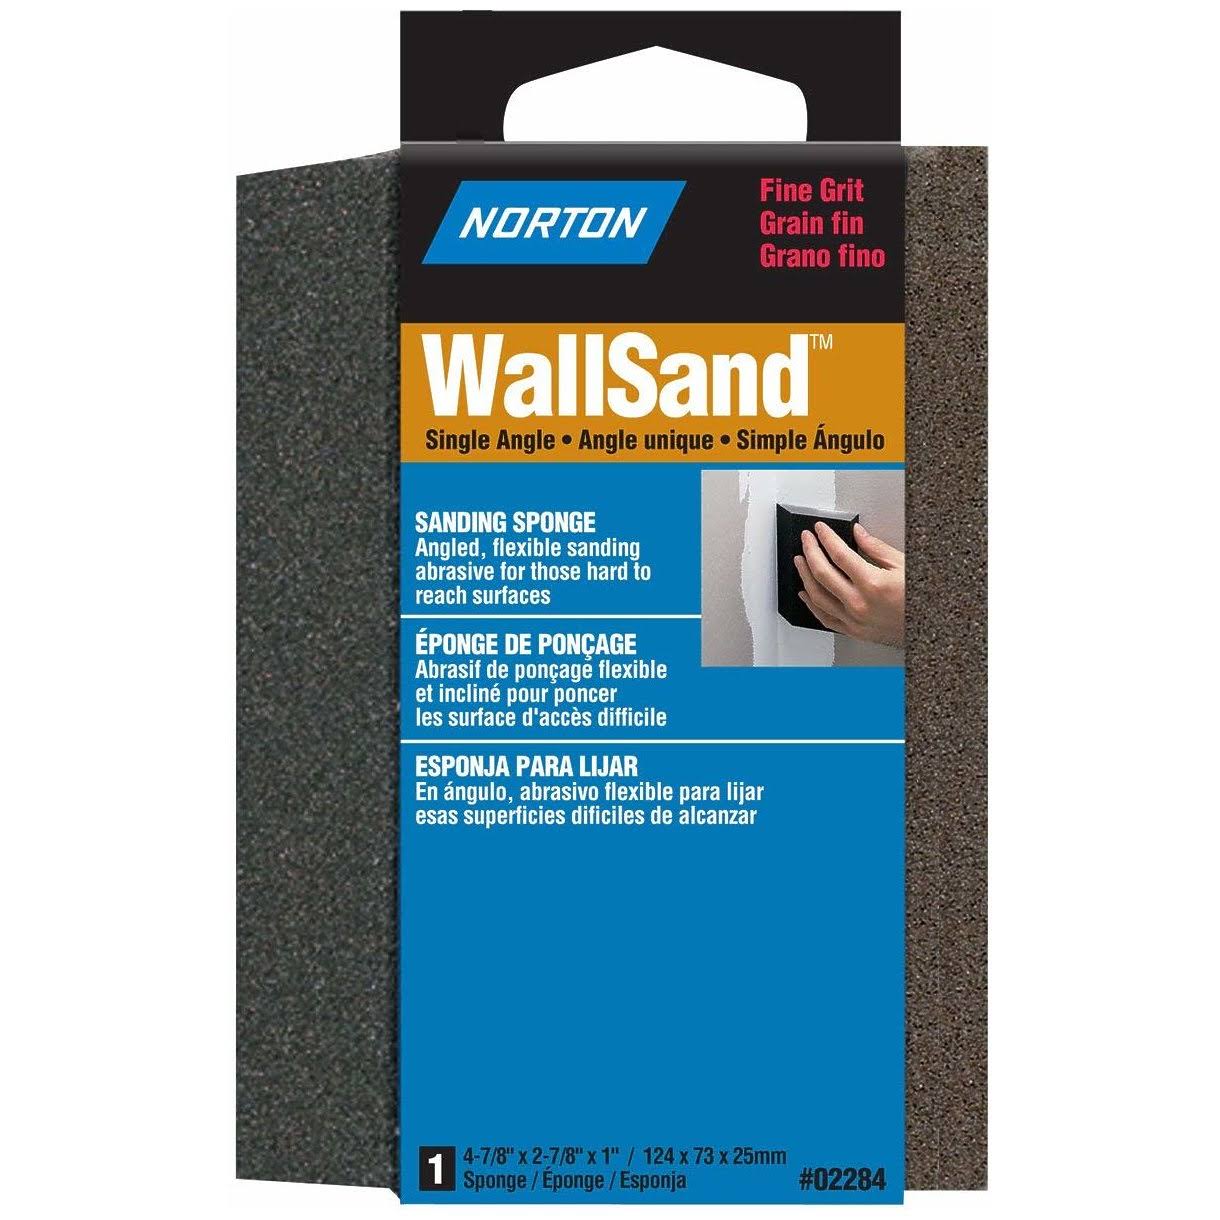 Norton 02284 Wallsand One Angle Sanding Sponge - Fine